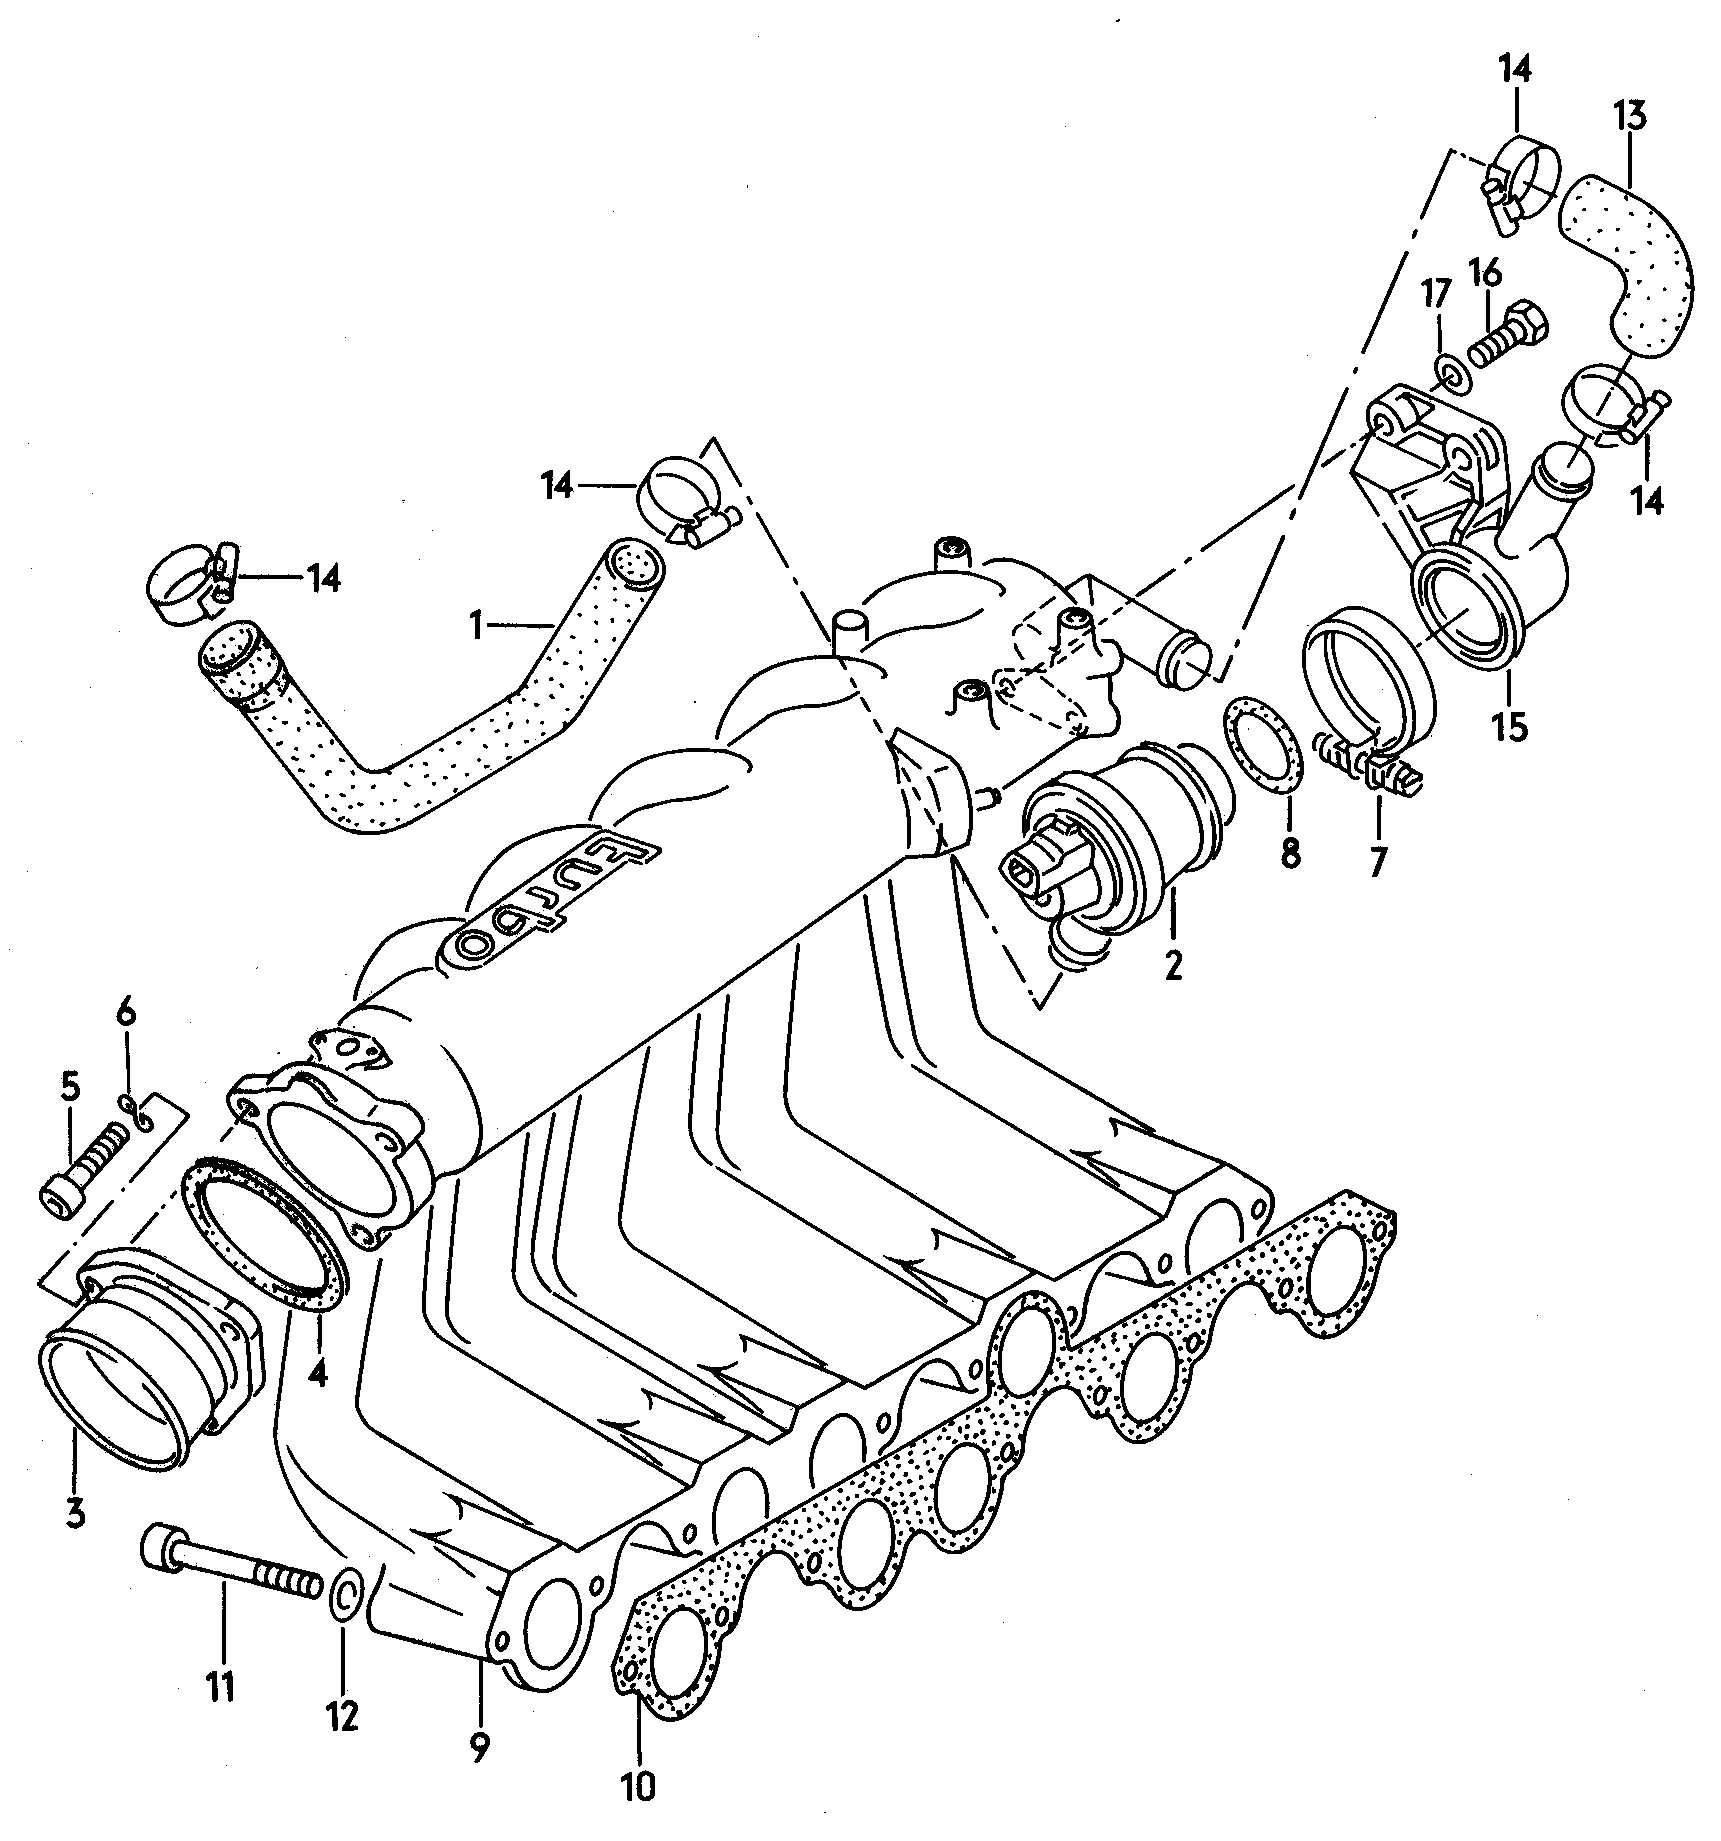 Intake connectionPressure-relief valve 2.0 Ltr. - Audi 100/Avant - a100